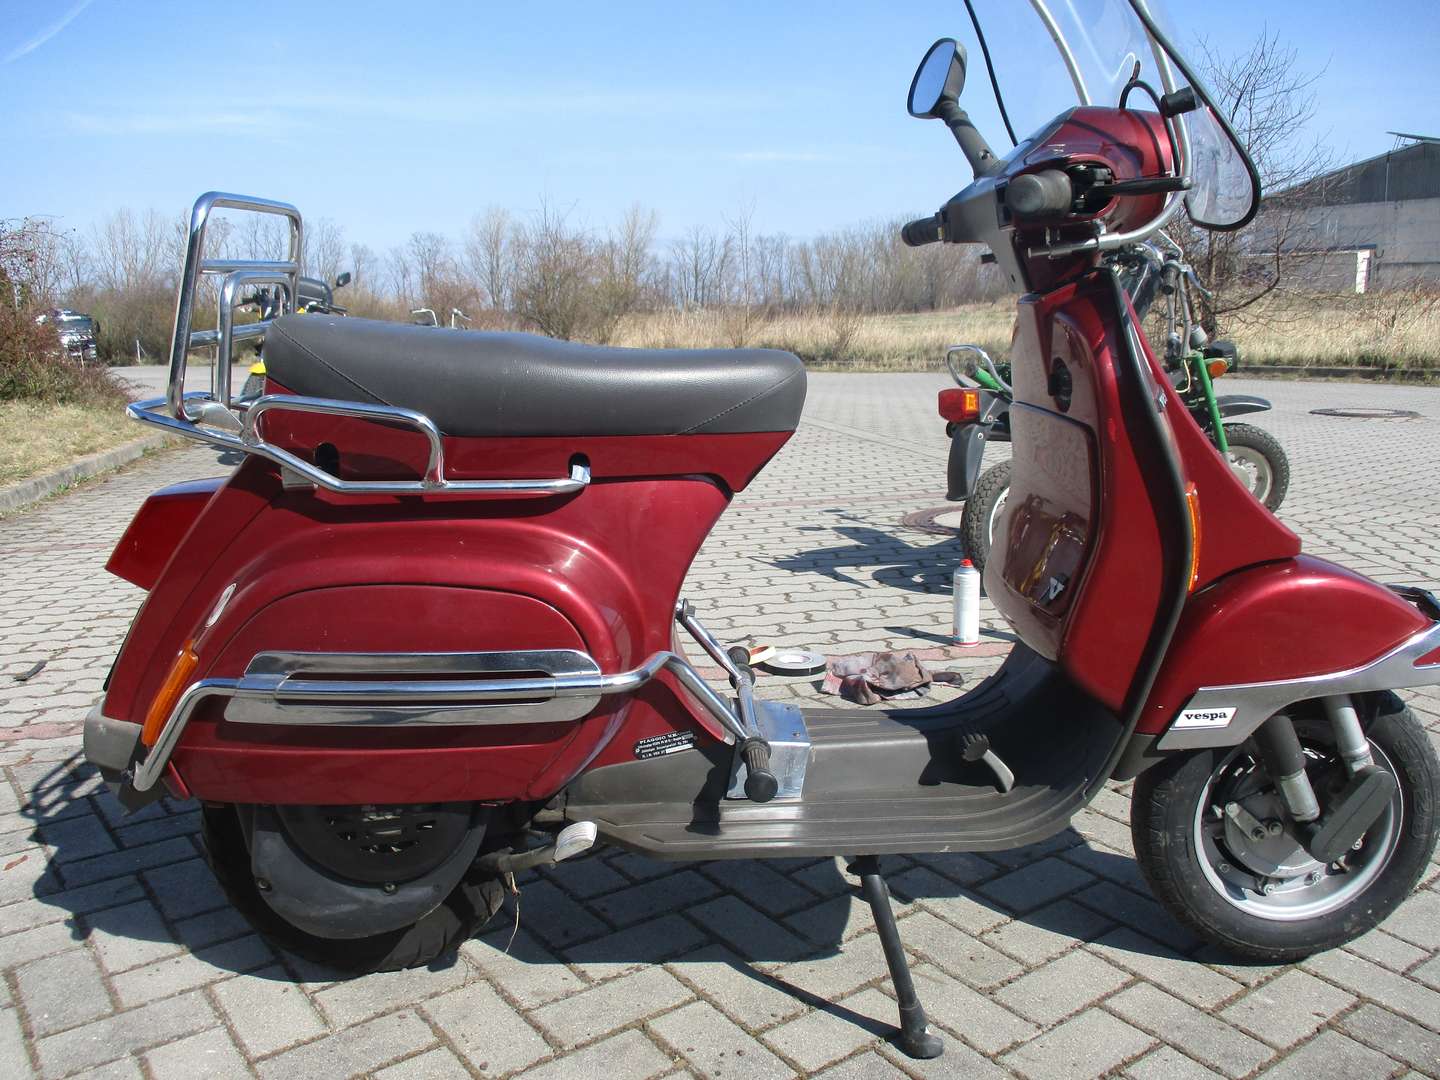 Vespa PK 50 Mofa/Moped/Mokick in Rot gebraucht in Calau für € 1.500,-